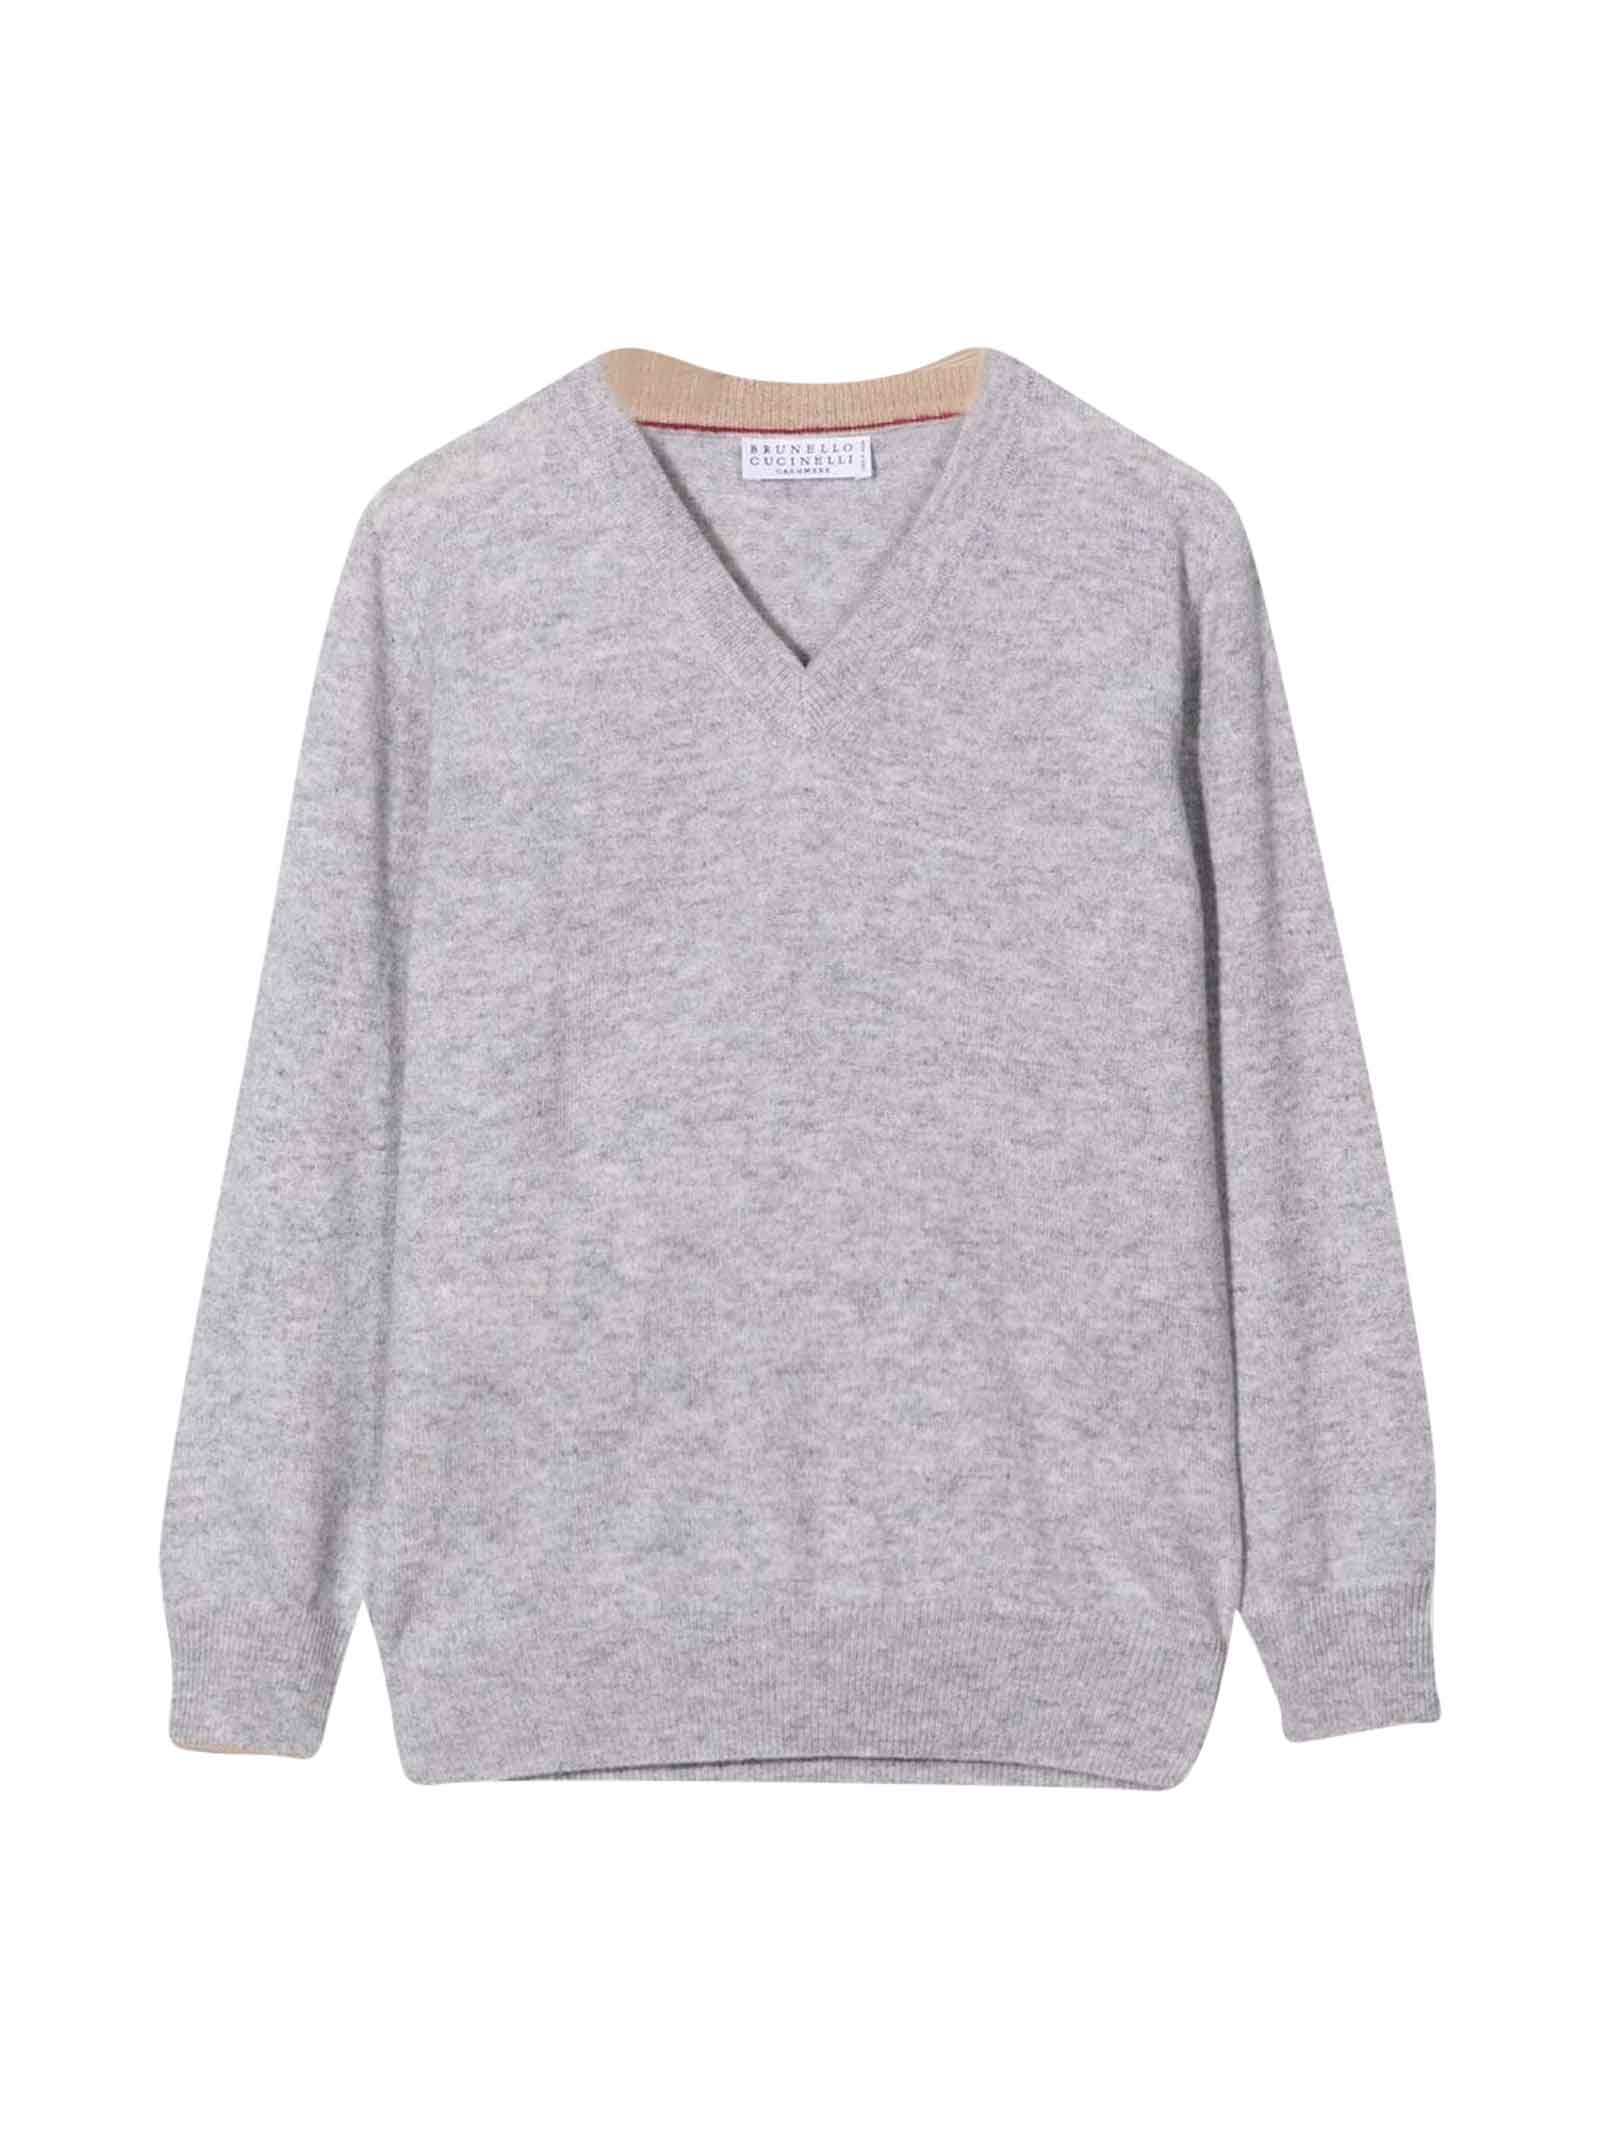 Brunello Cucinelli Gray Teen Sweater